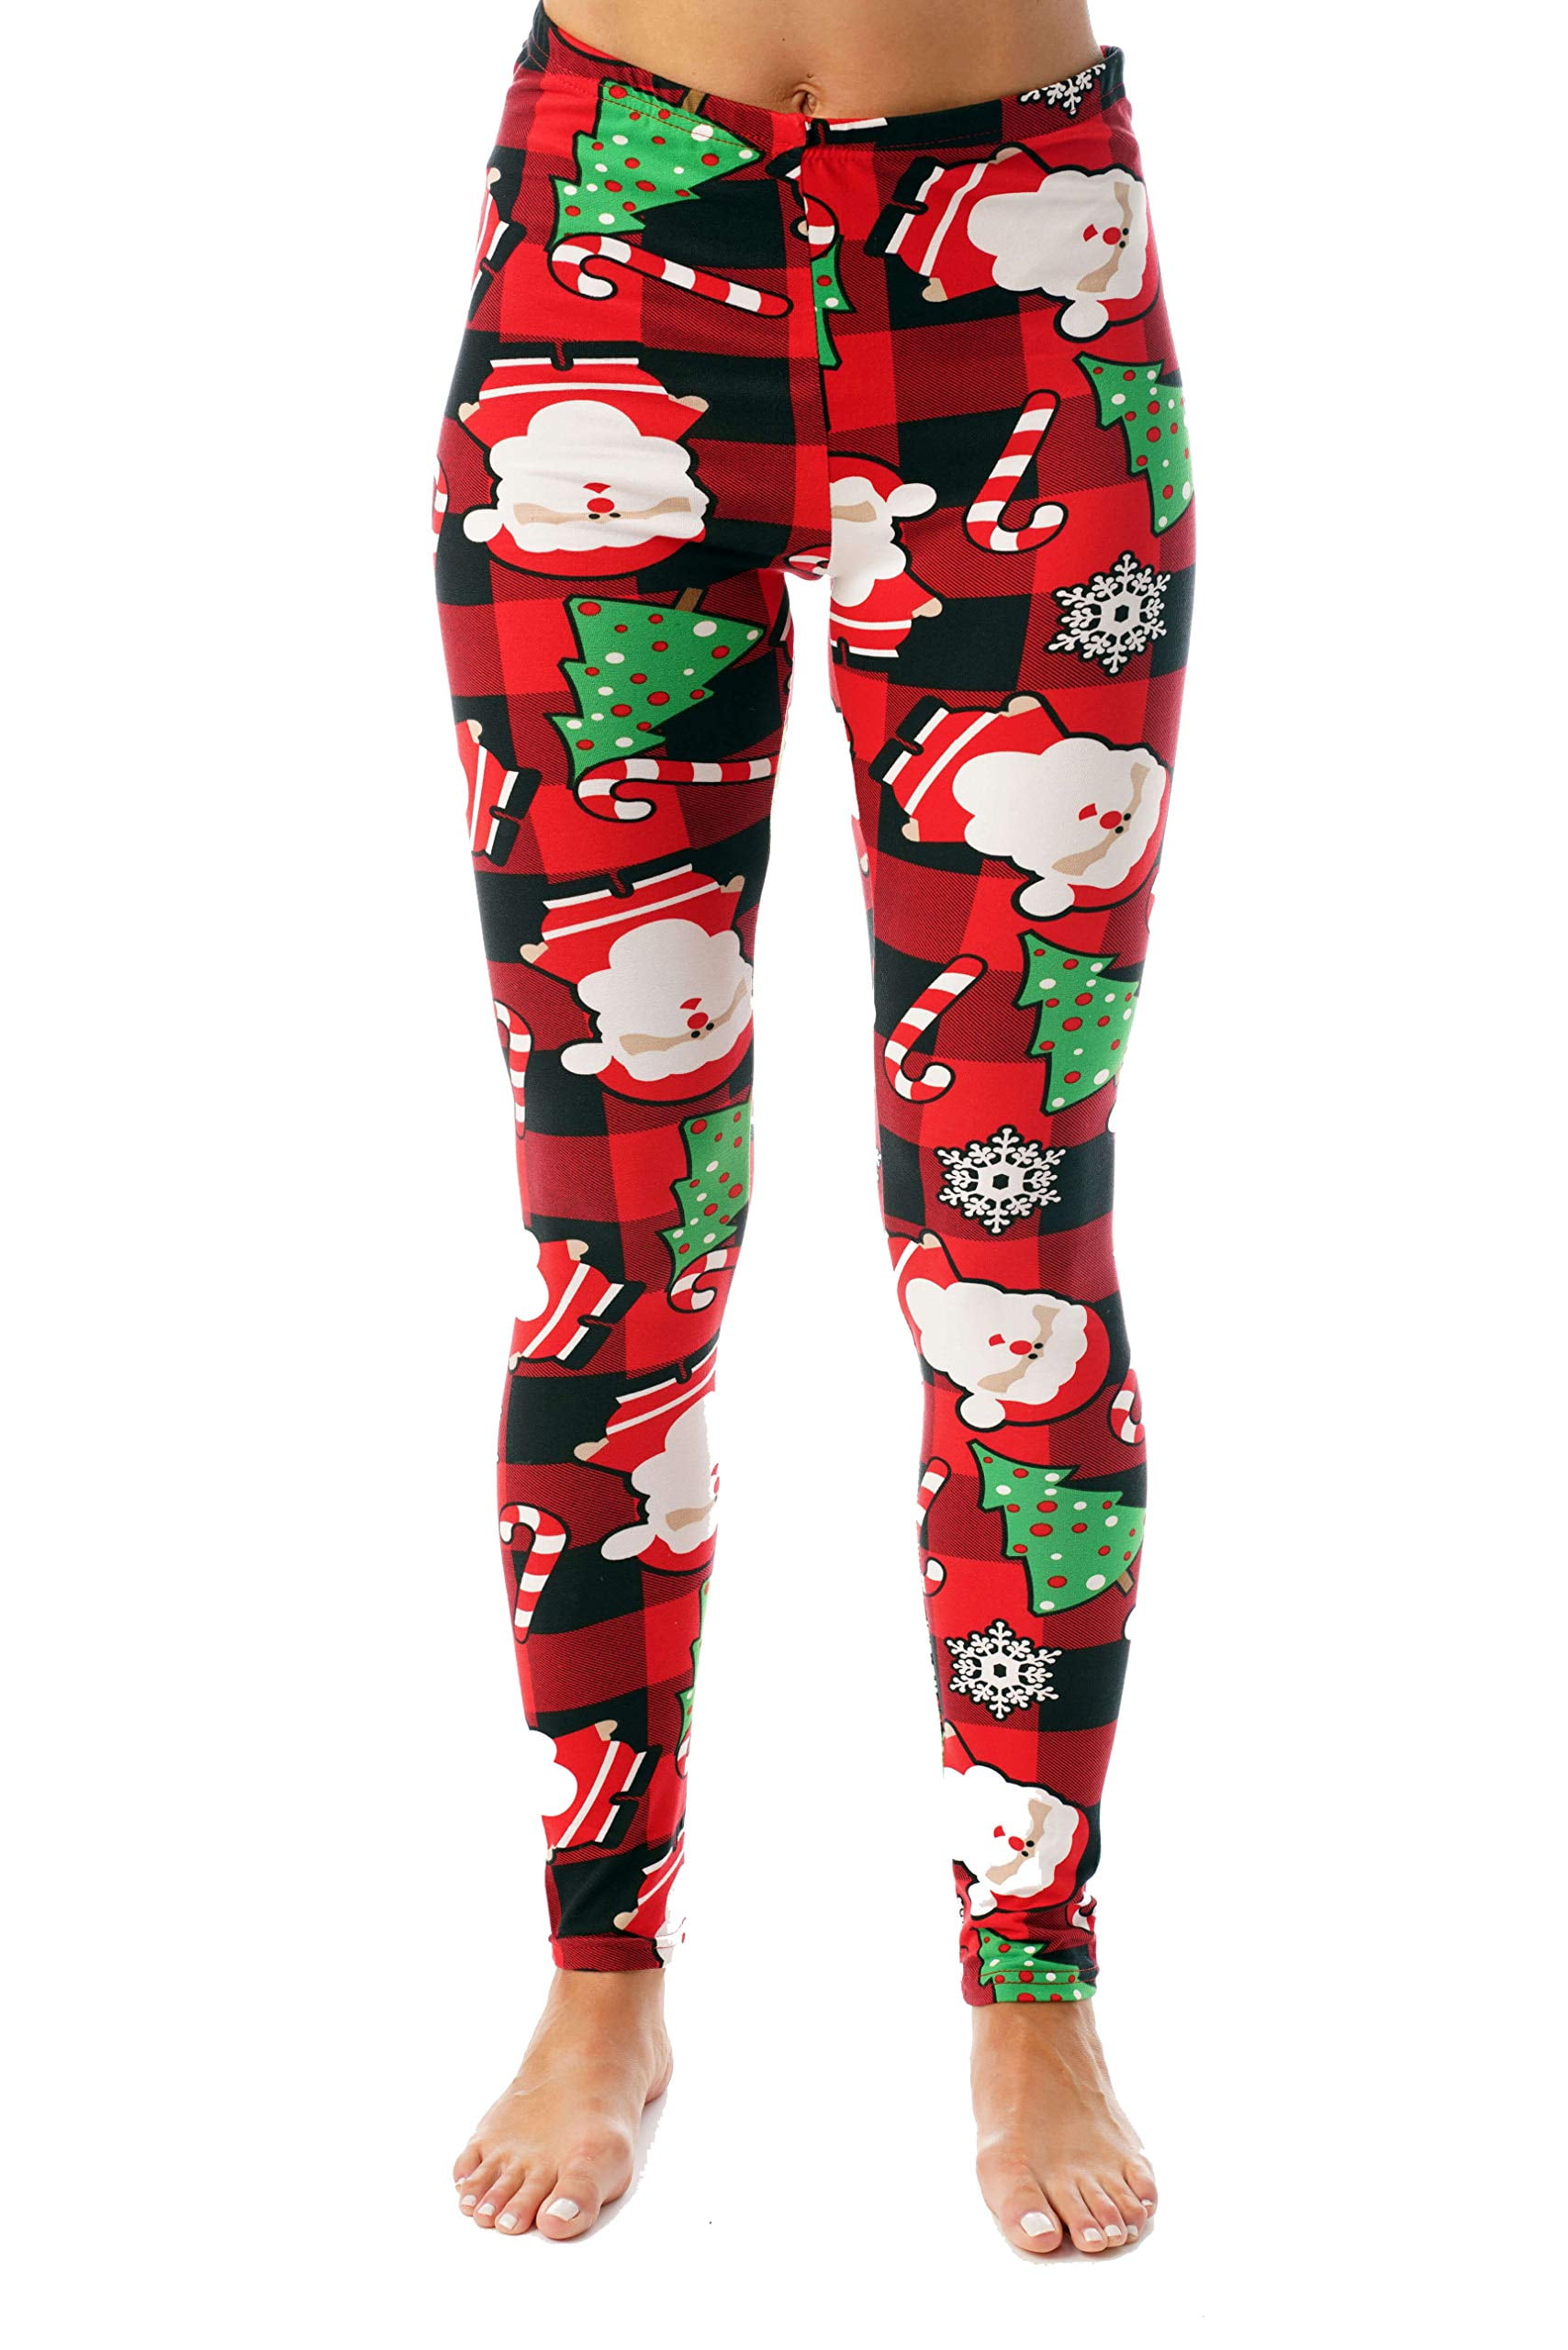 Just Love Ugly Christmas Holiday Leggings (Buffalo Plaid, 2X